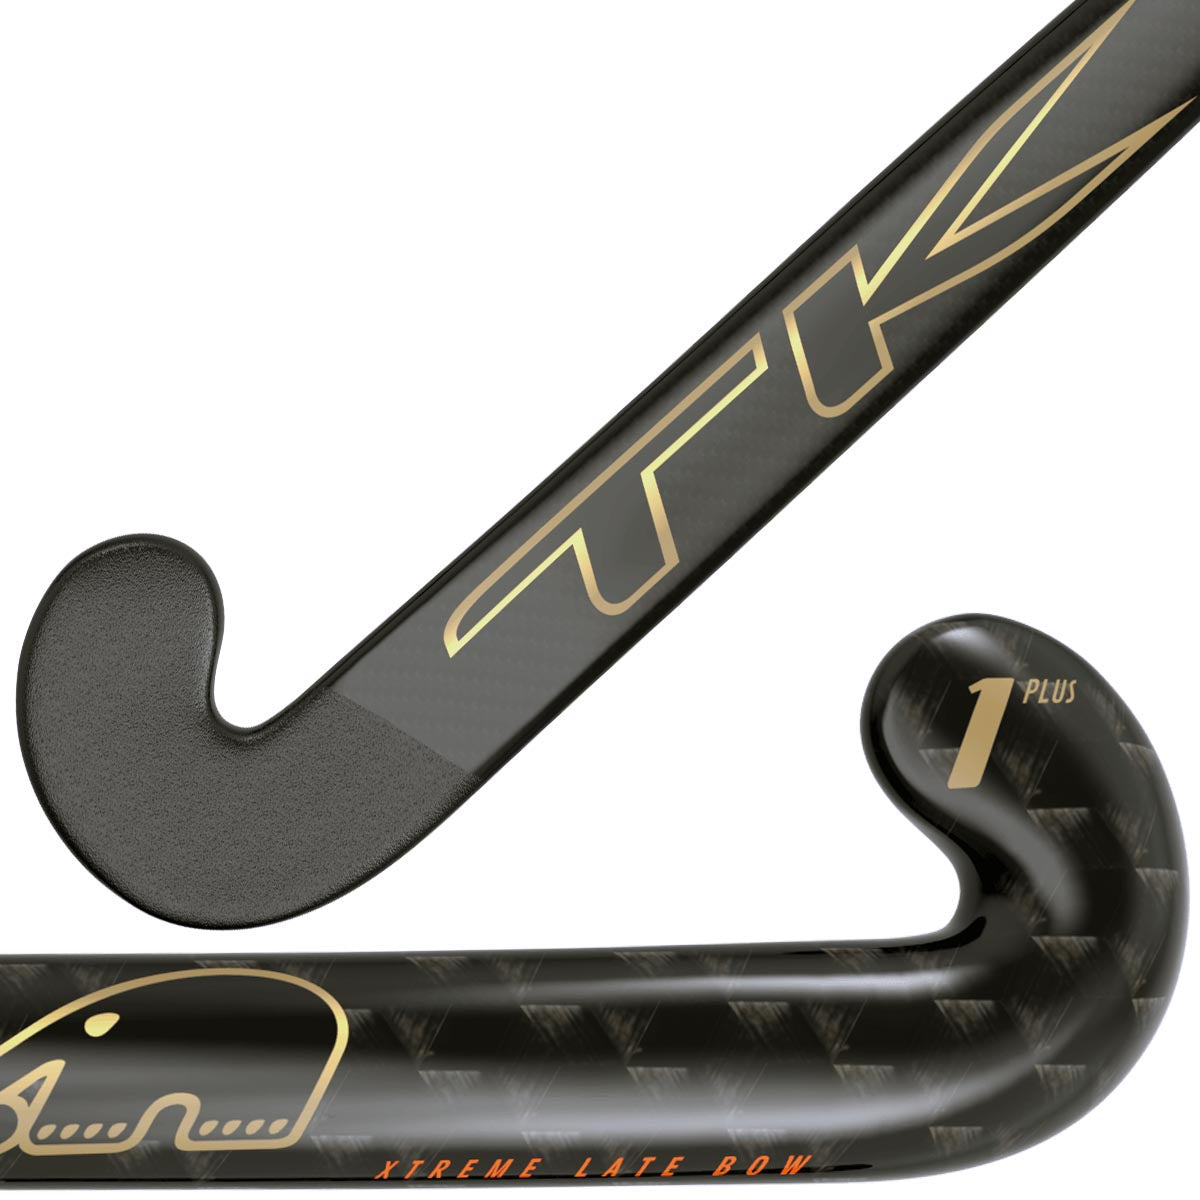 TK 1 Plus Xtreme Late Bow Field Stick – the Net Sports